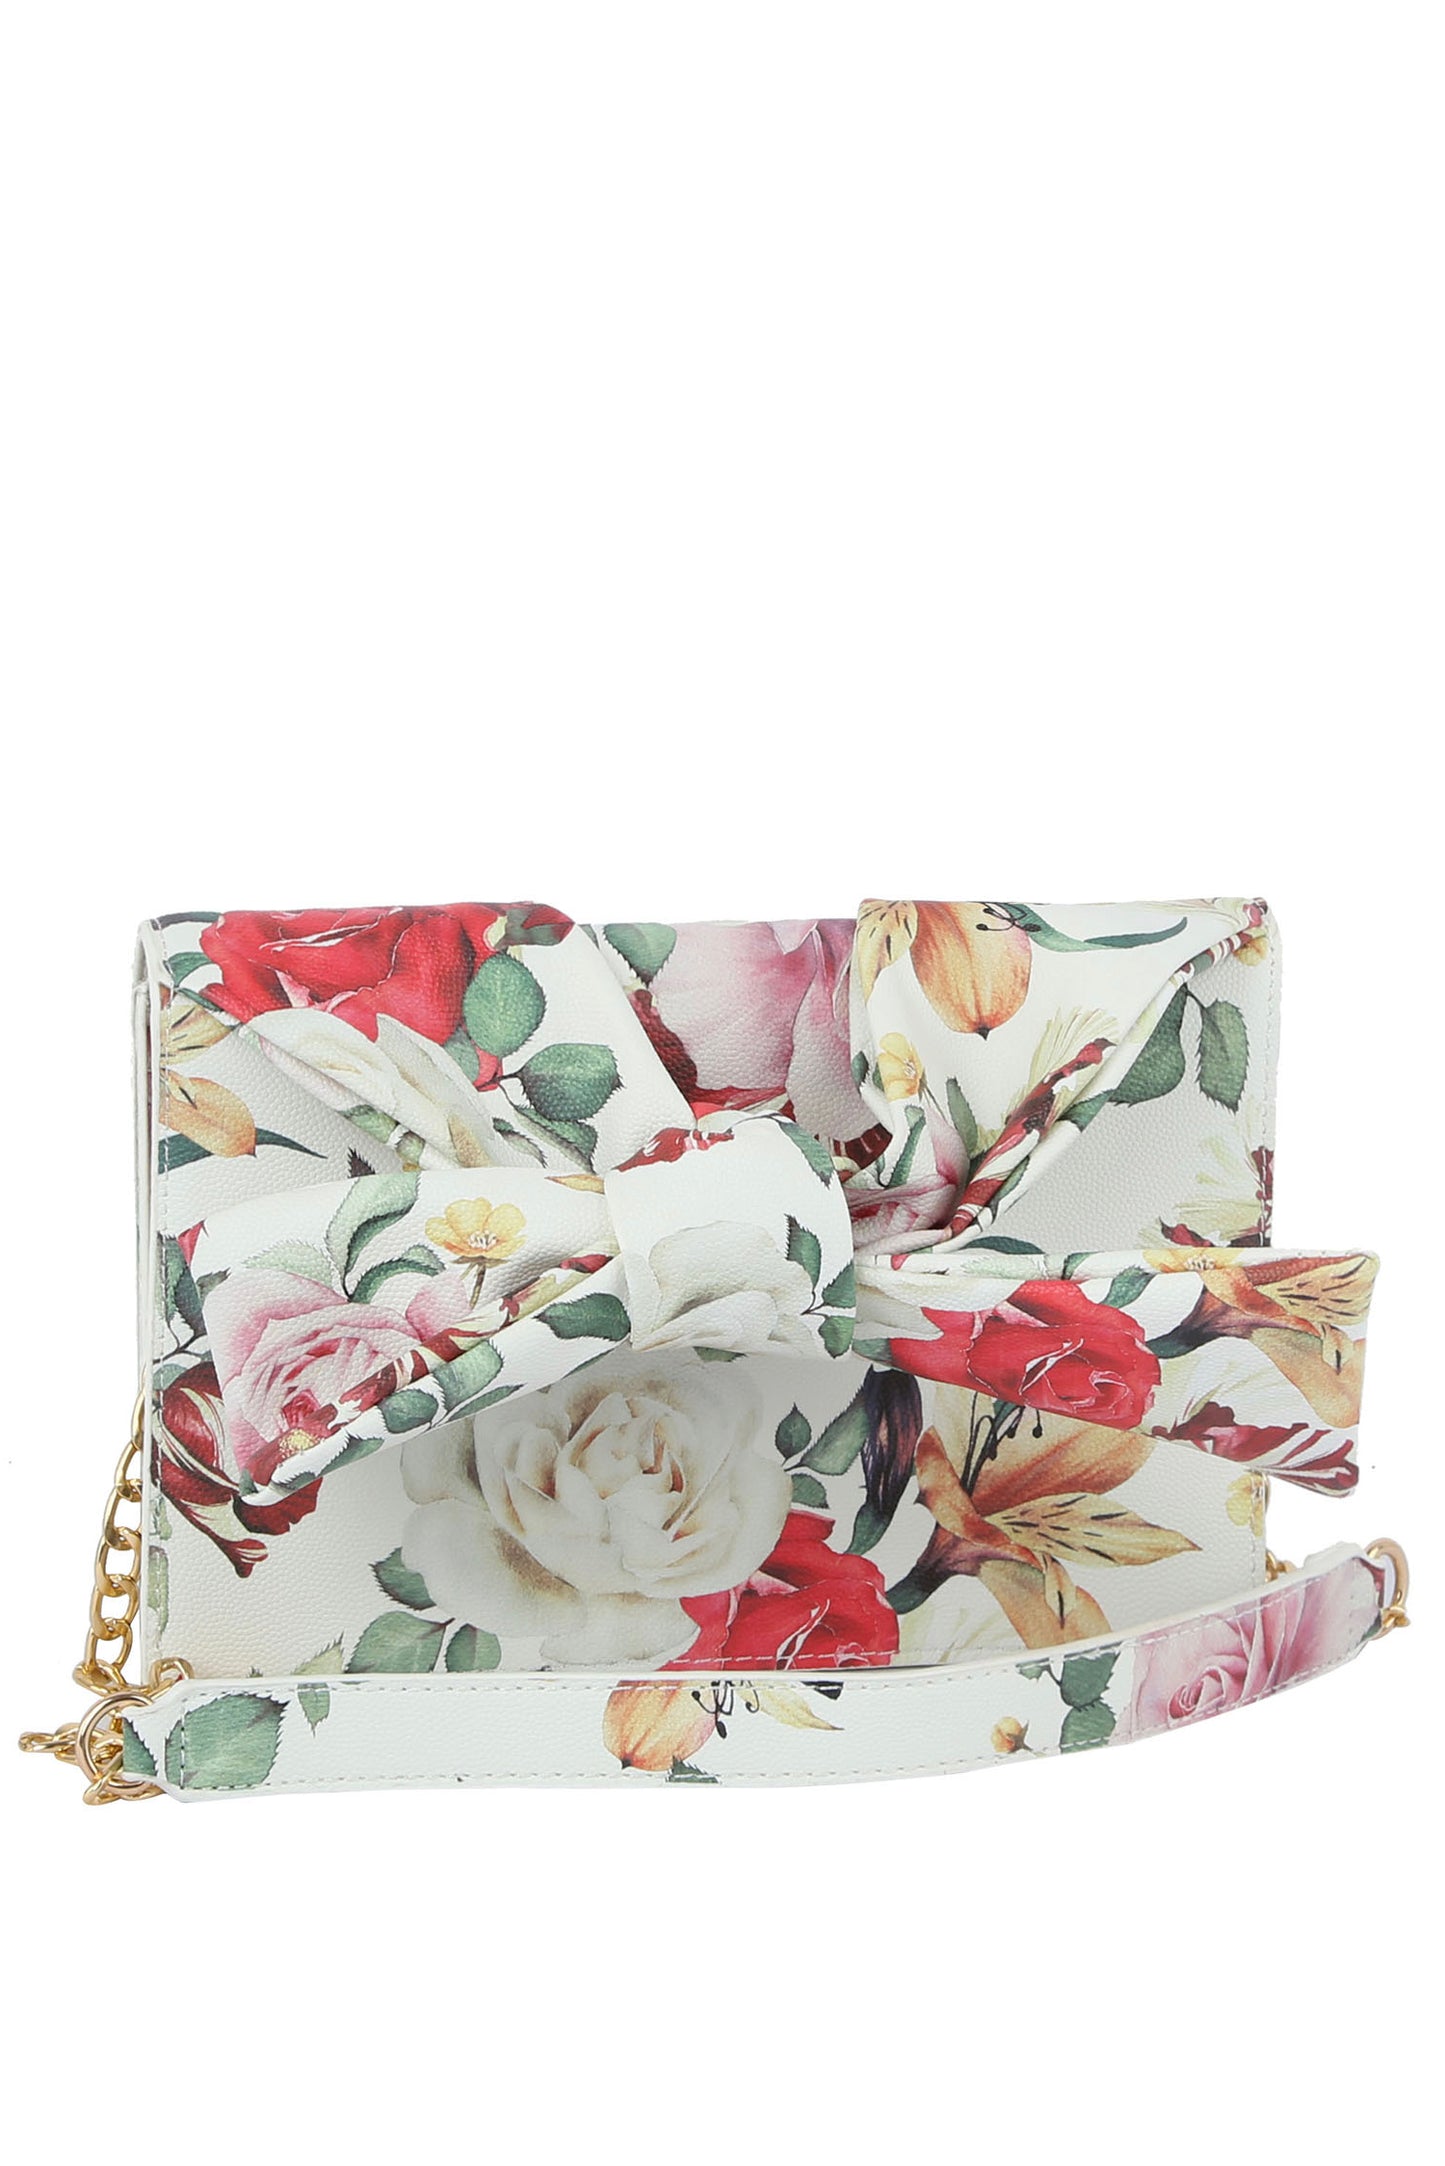 Big Bloom Handbag  Floral Rose Pattern Clutch with Bow Detail